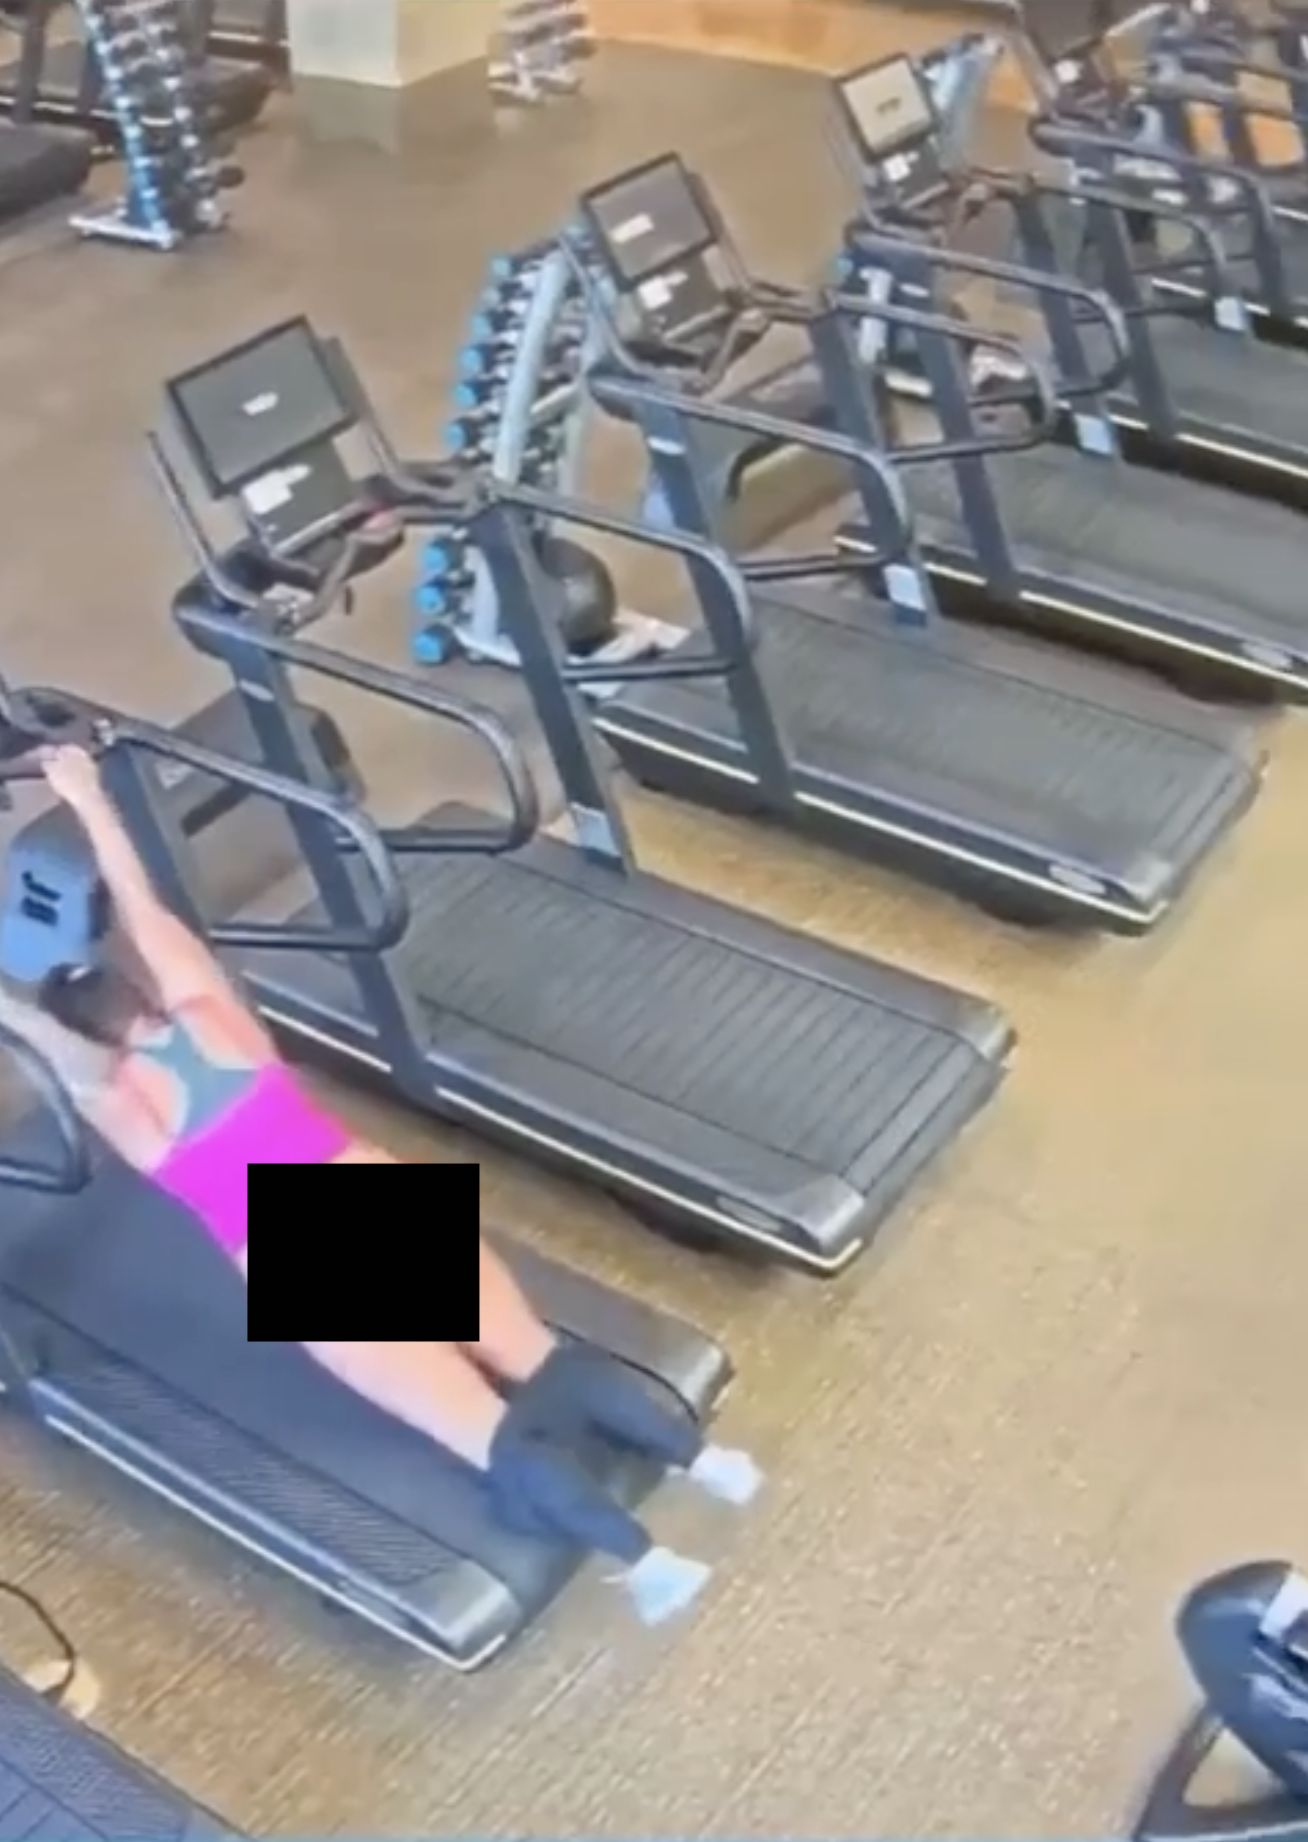 adam mcculloch add photo naked woman on treadmill